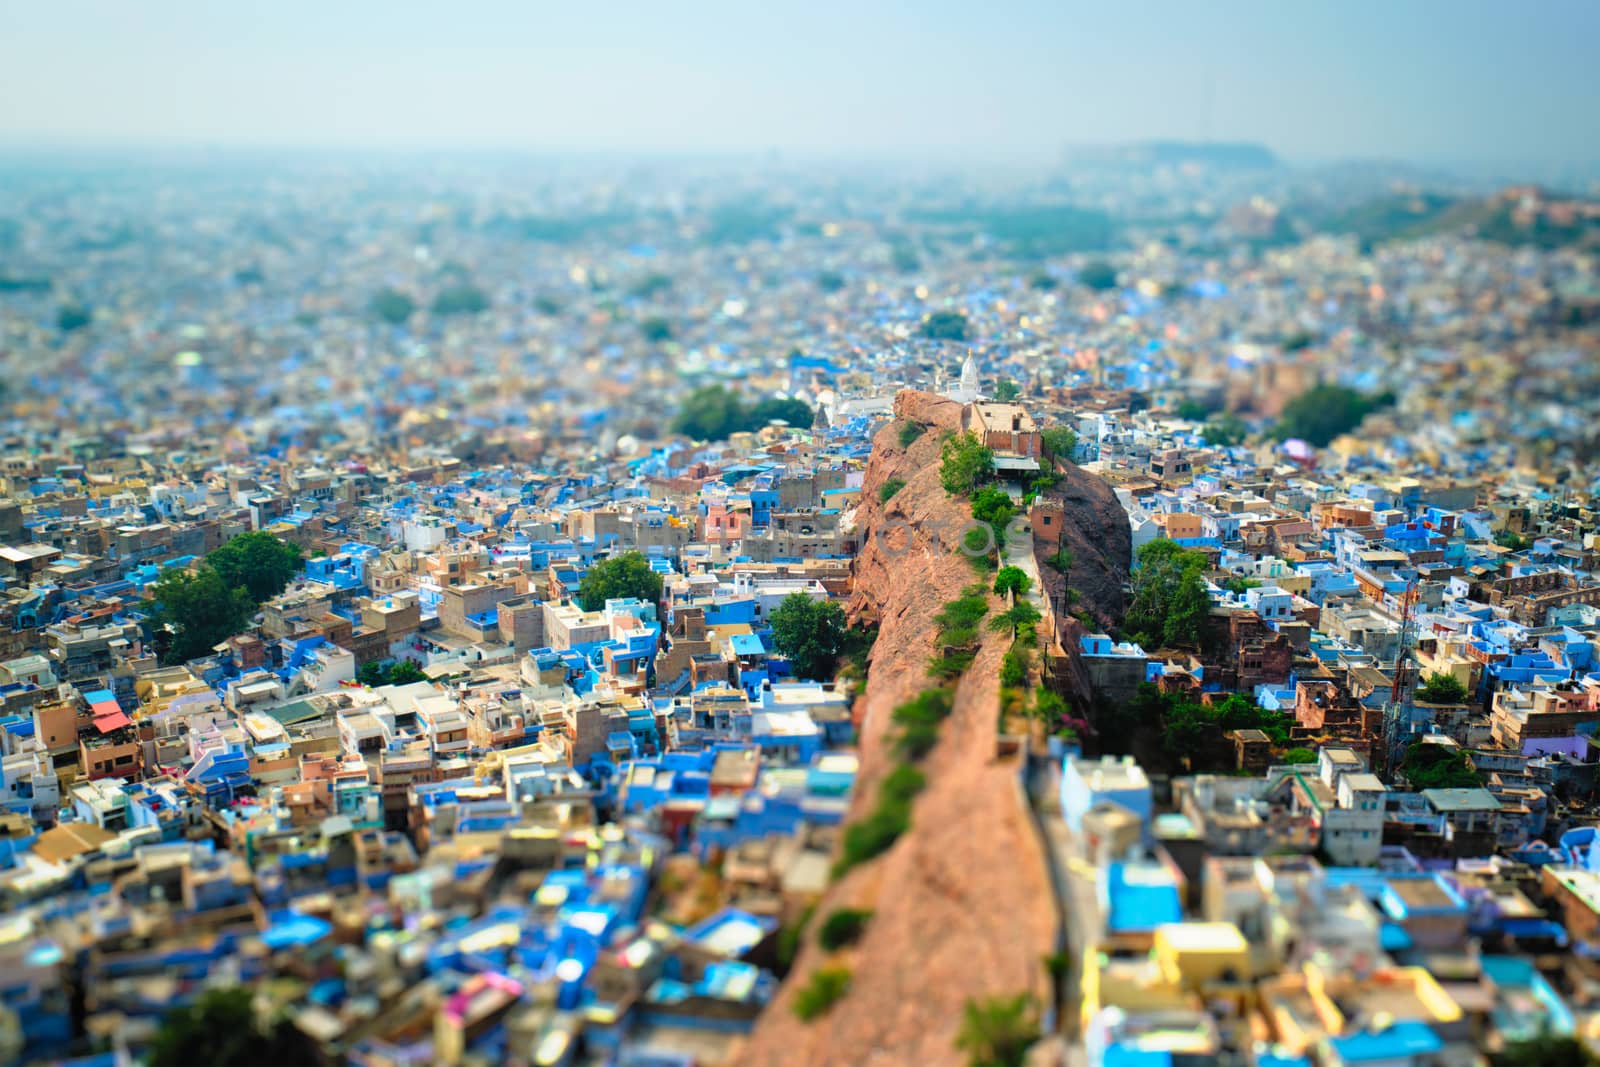 Aerial view of Jodhpur Blue City. Jodphur, Rajasthan, India by dimol